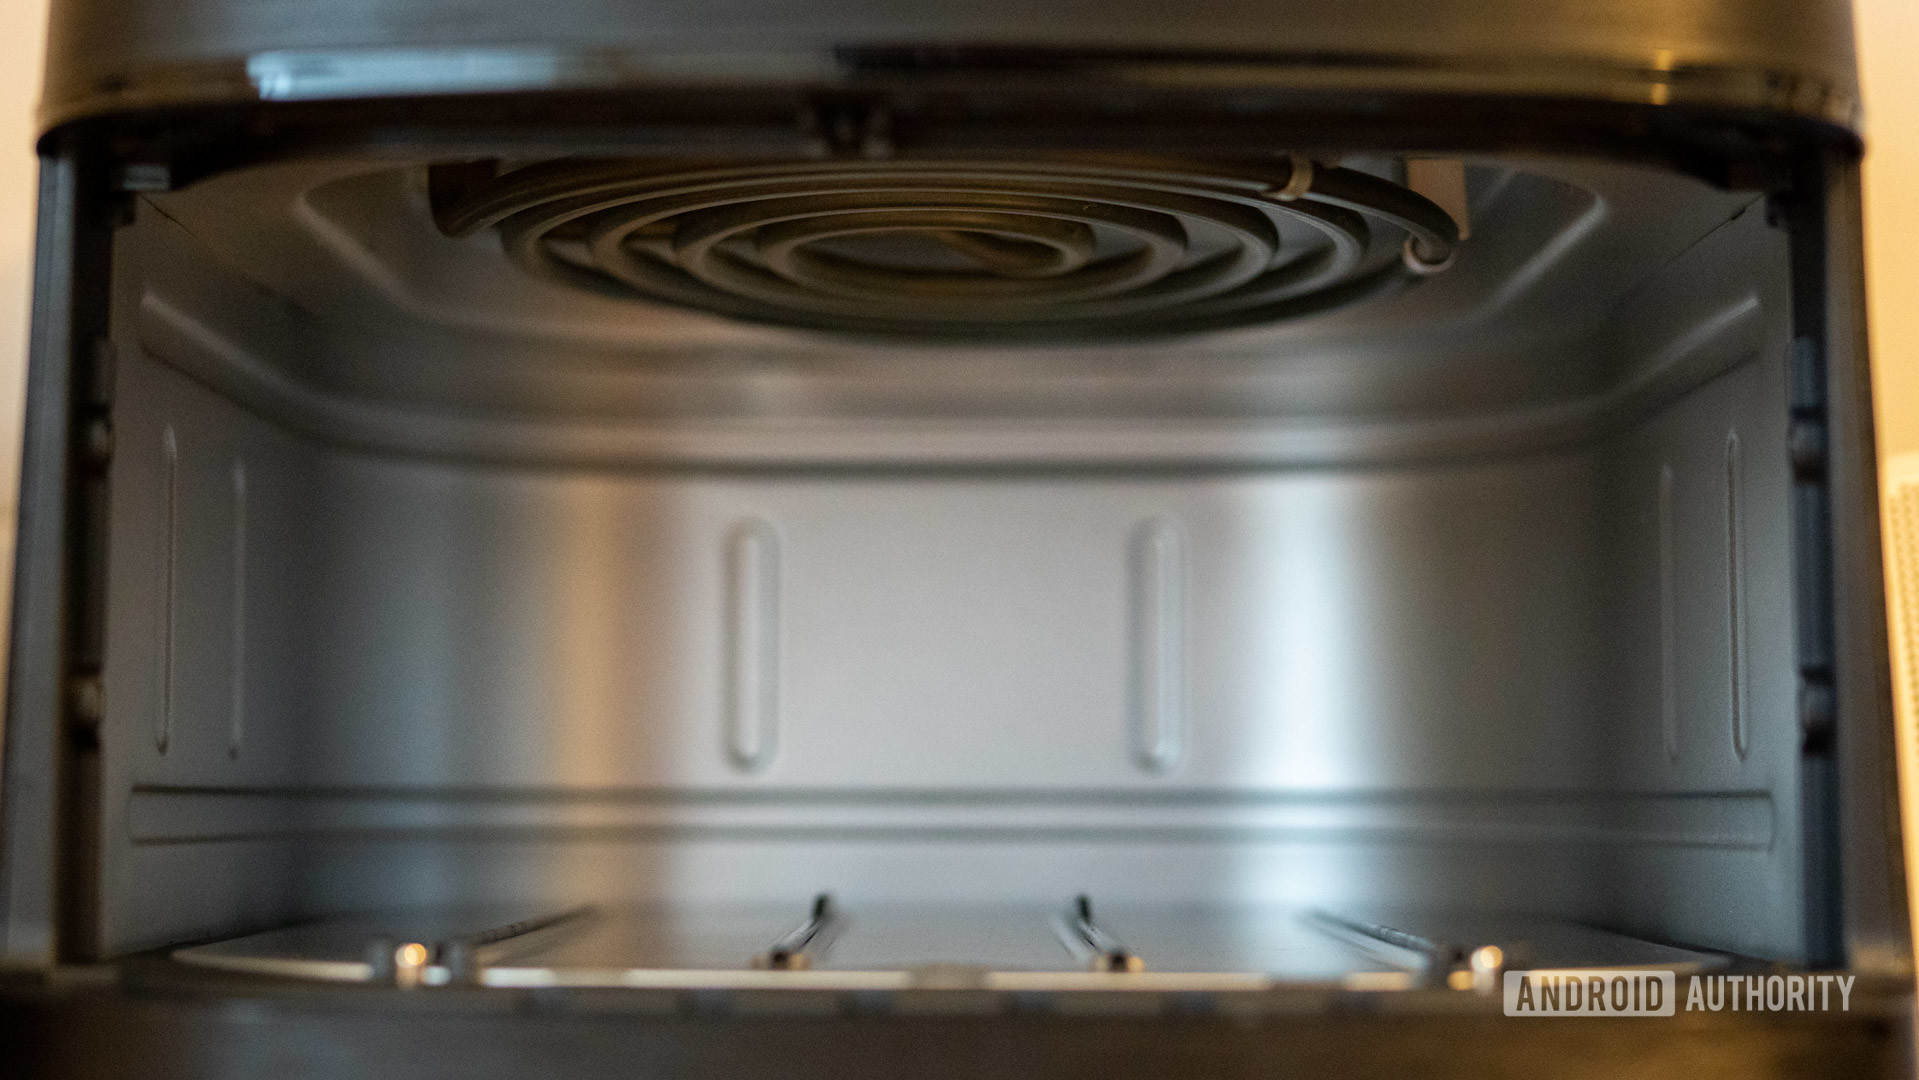 Cosori Smart Air Fryer heating element